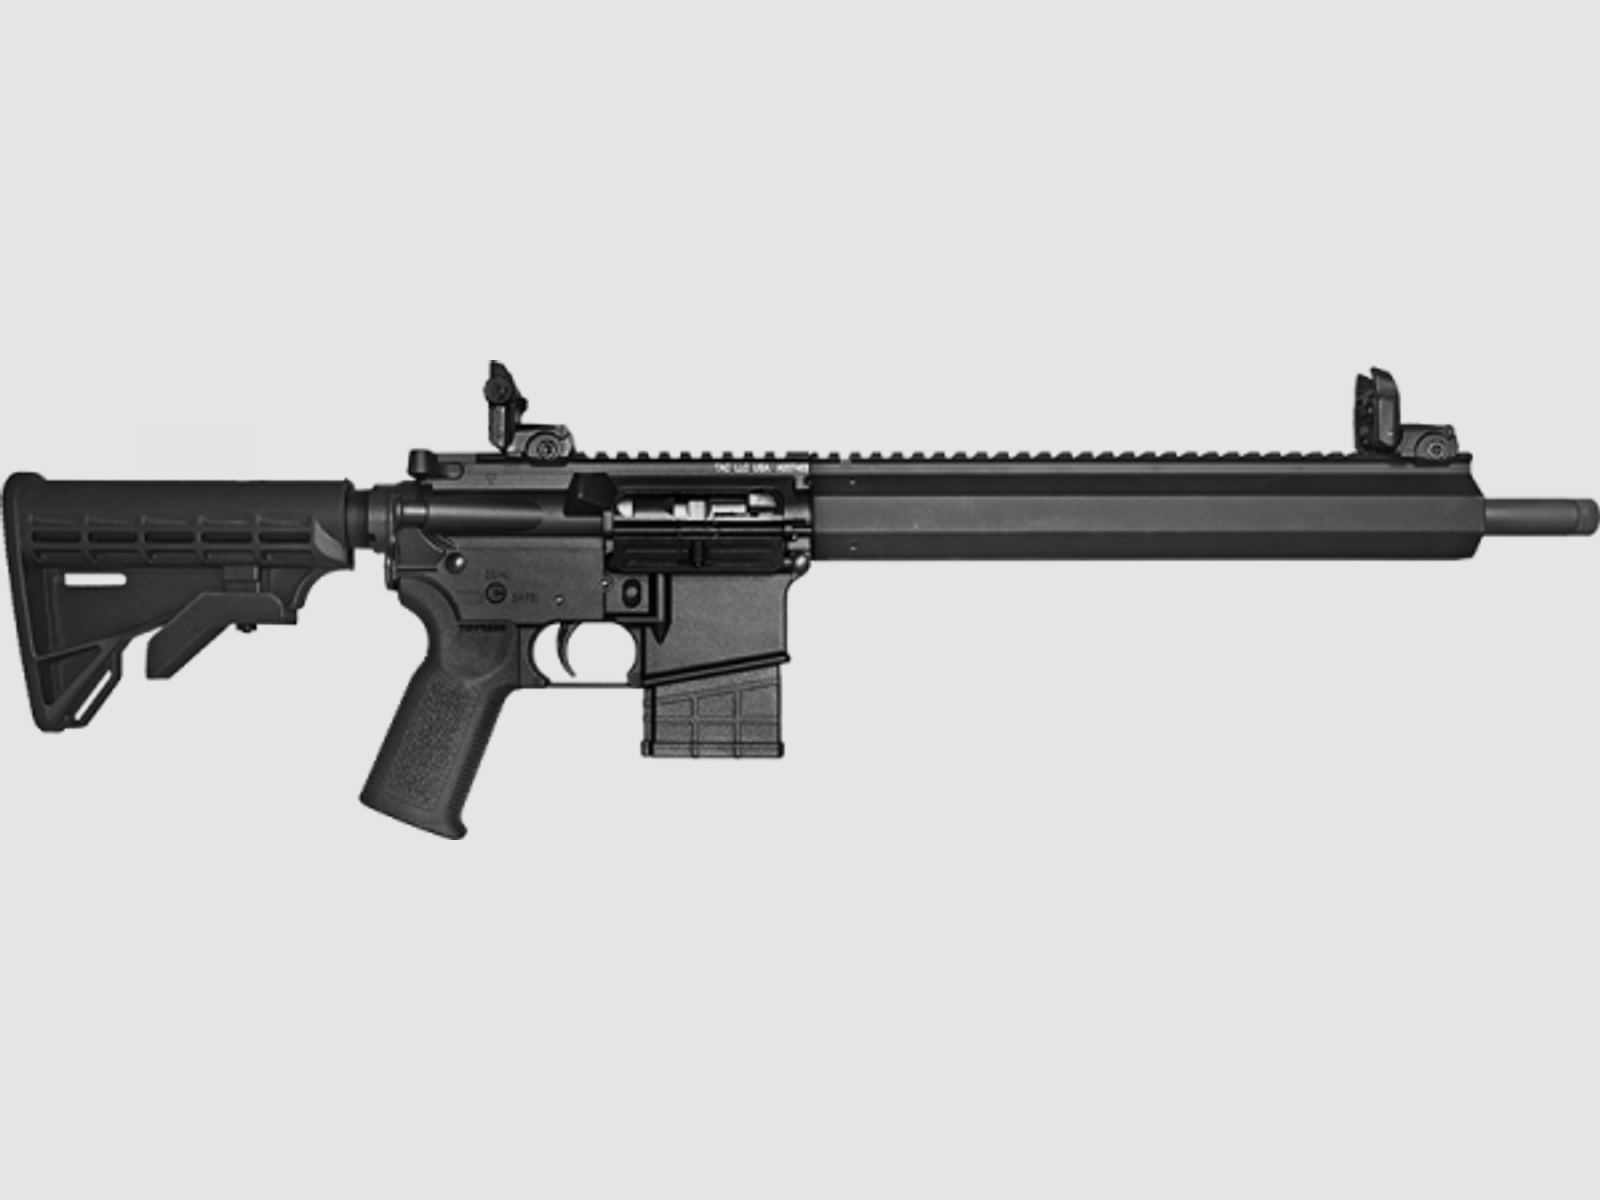 Tippmann Arms M4-22 Elite GS Selbstladebüchse